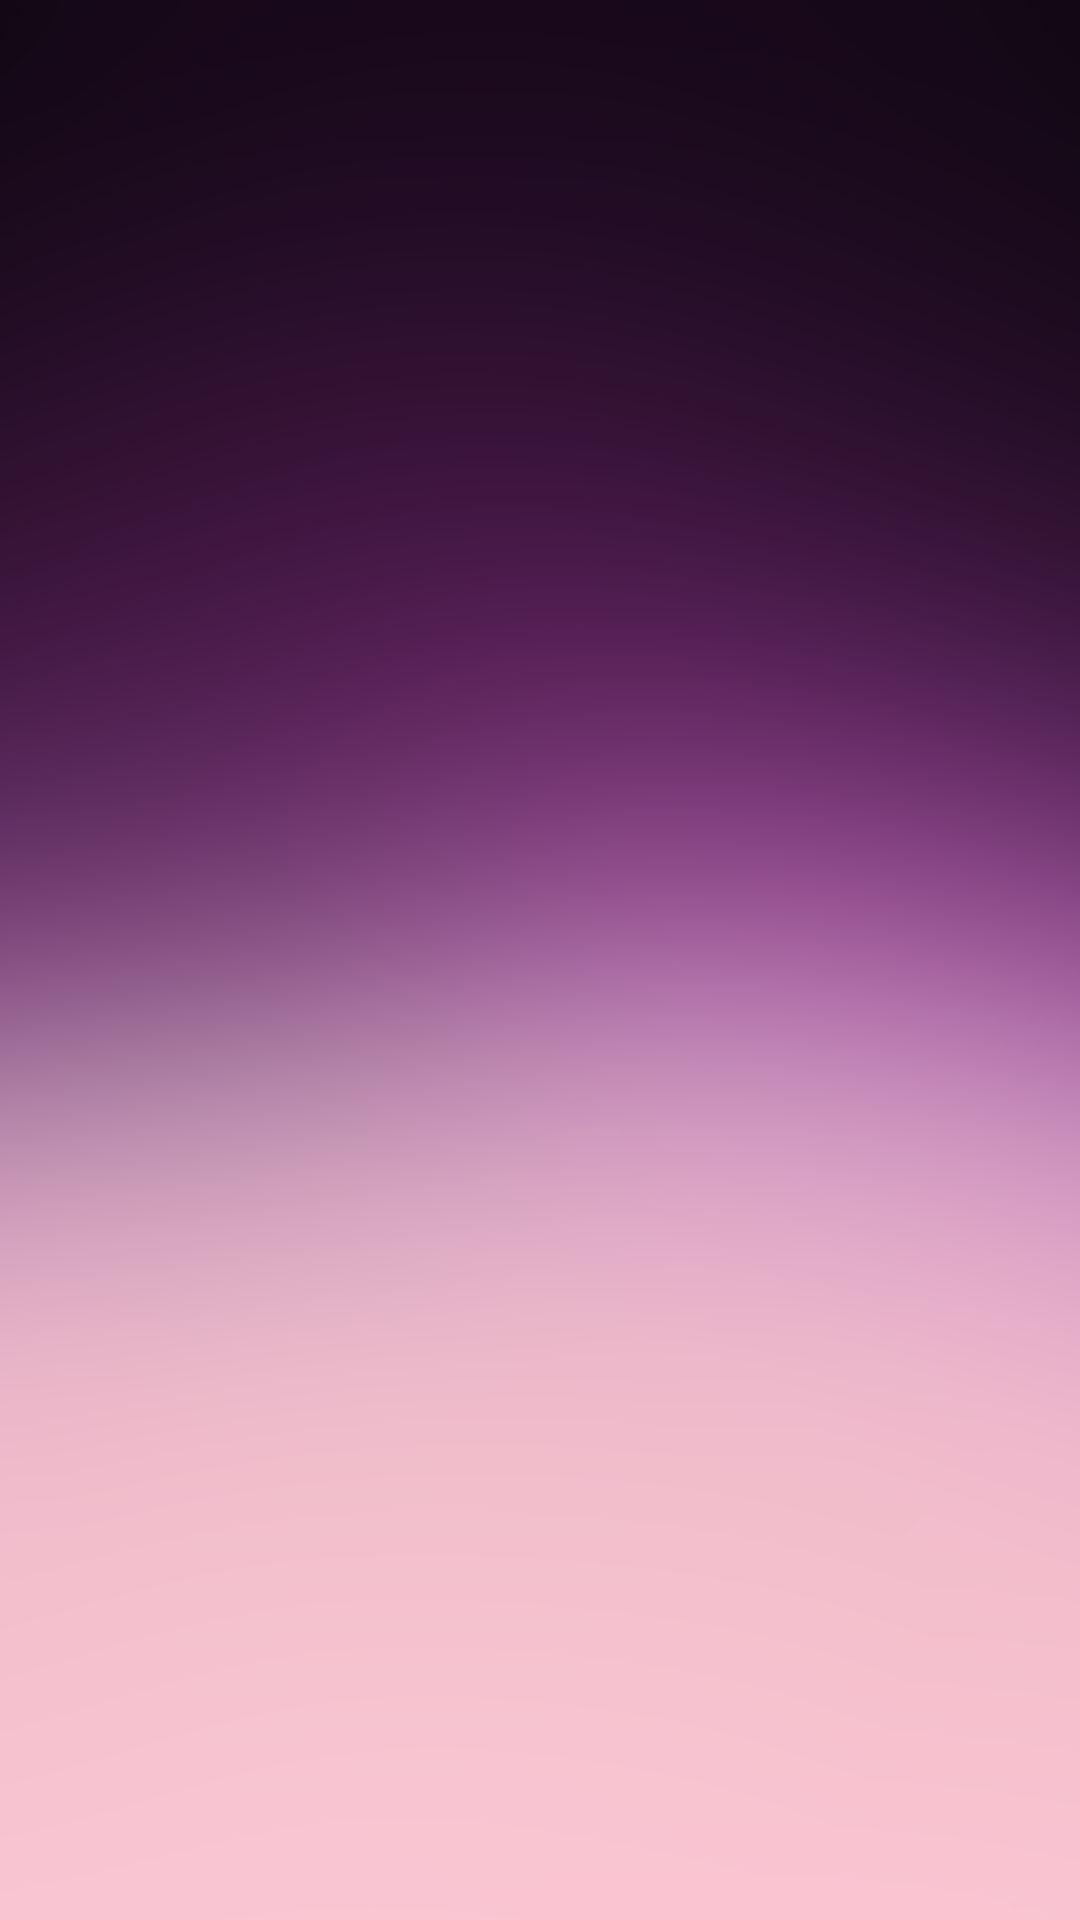 Pink Grey Gradient Background, Gradient Background, Pink Gradient, Gradient  Background Image And Wallpaper for Free Download